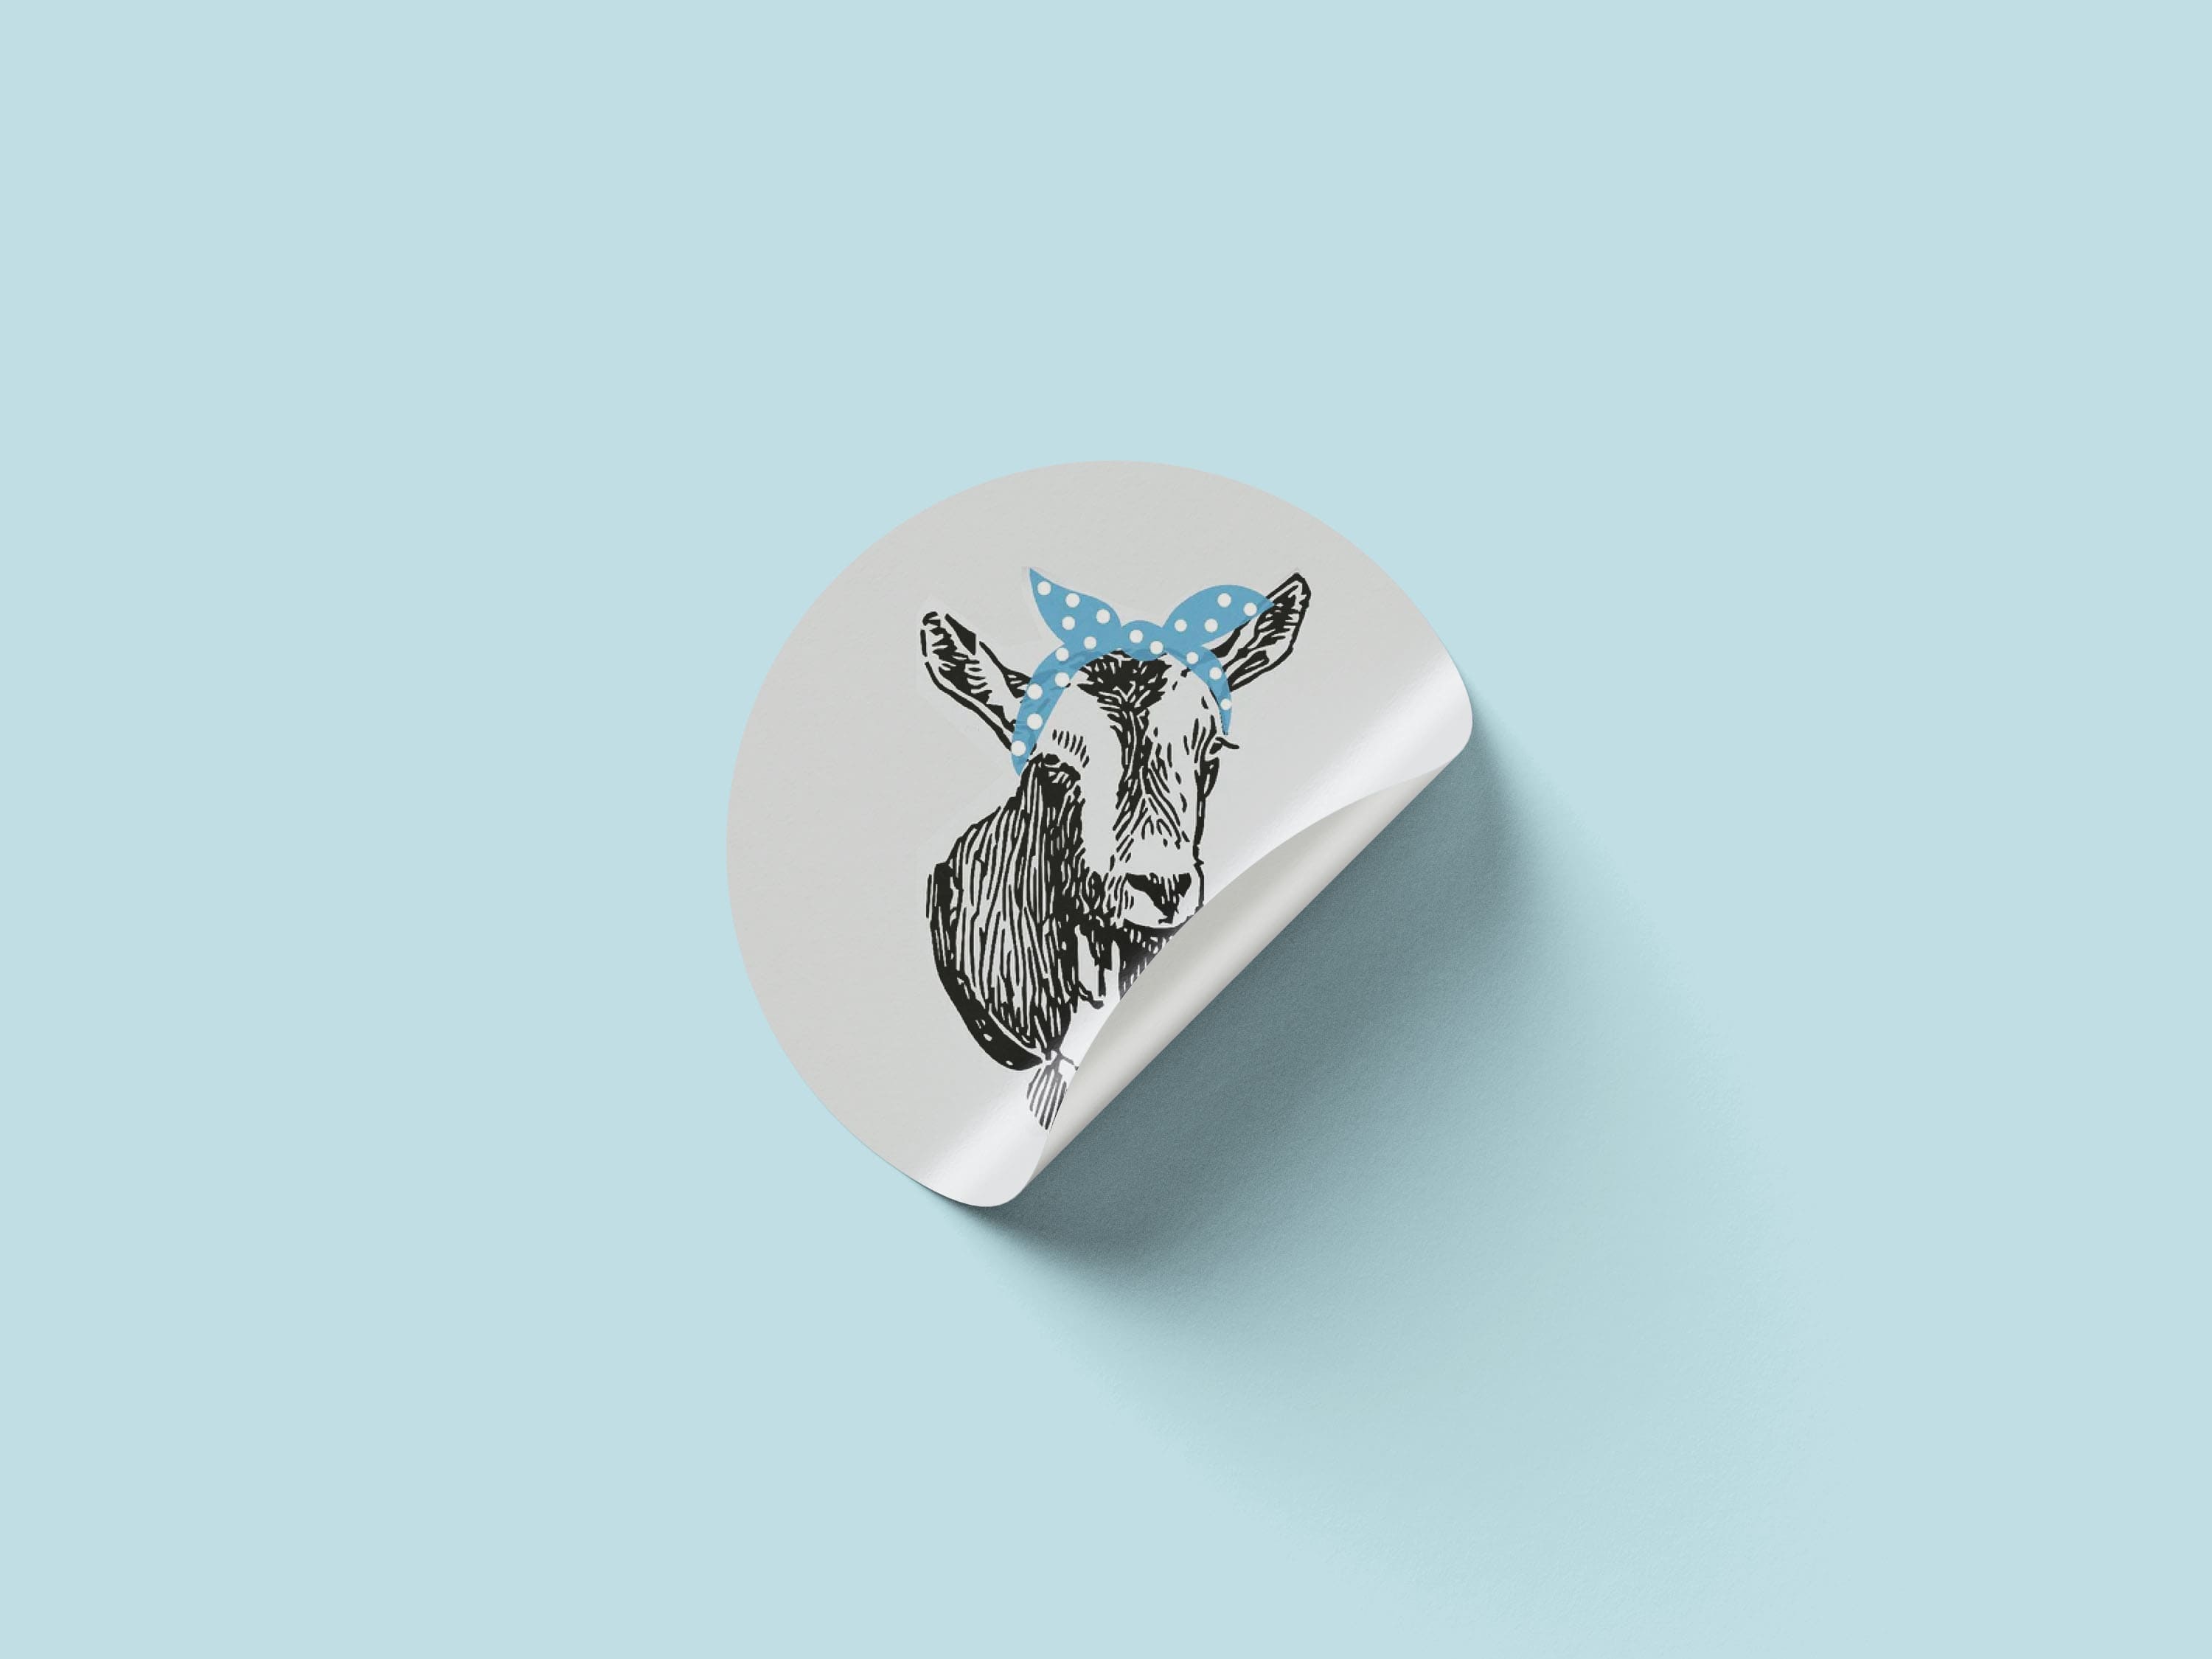 Modern design with the goat symbols.